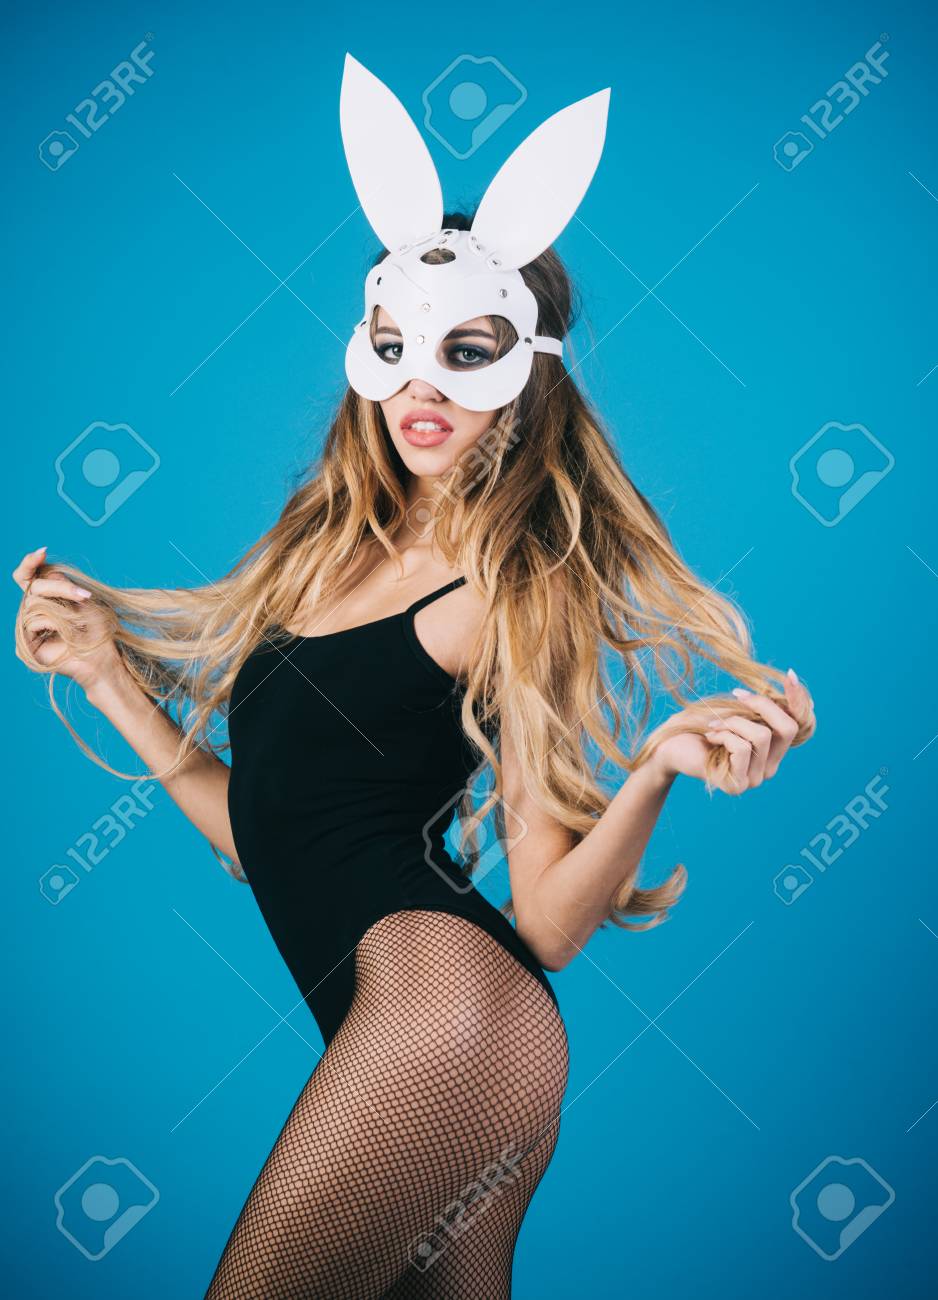 alejandro schwed add photo hot easter bunny girl pics